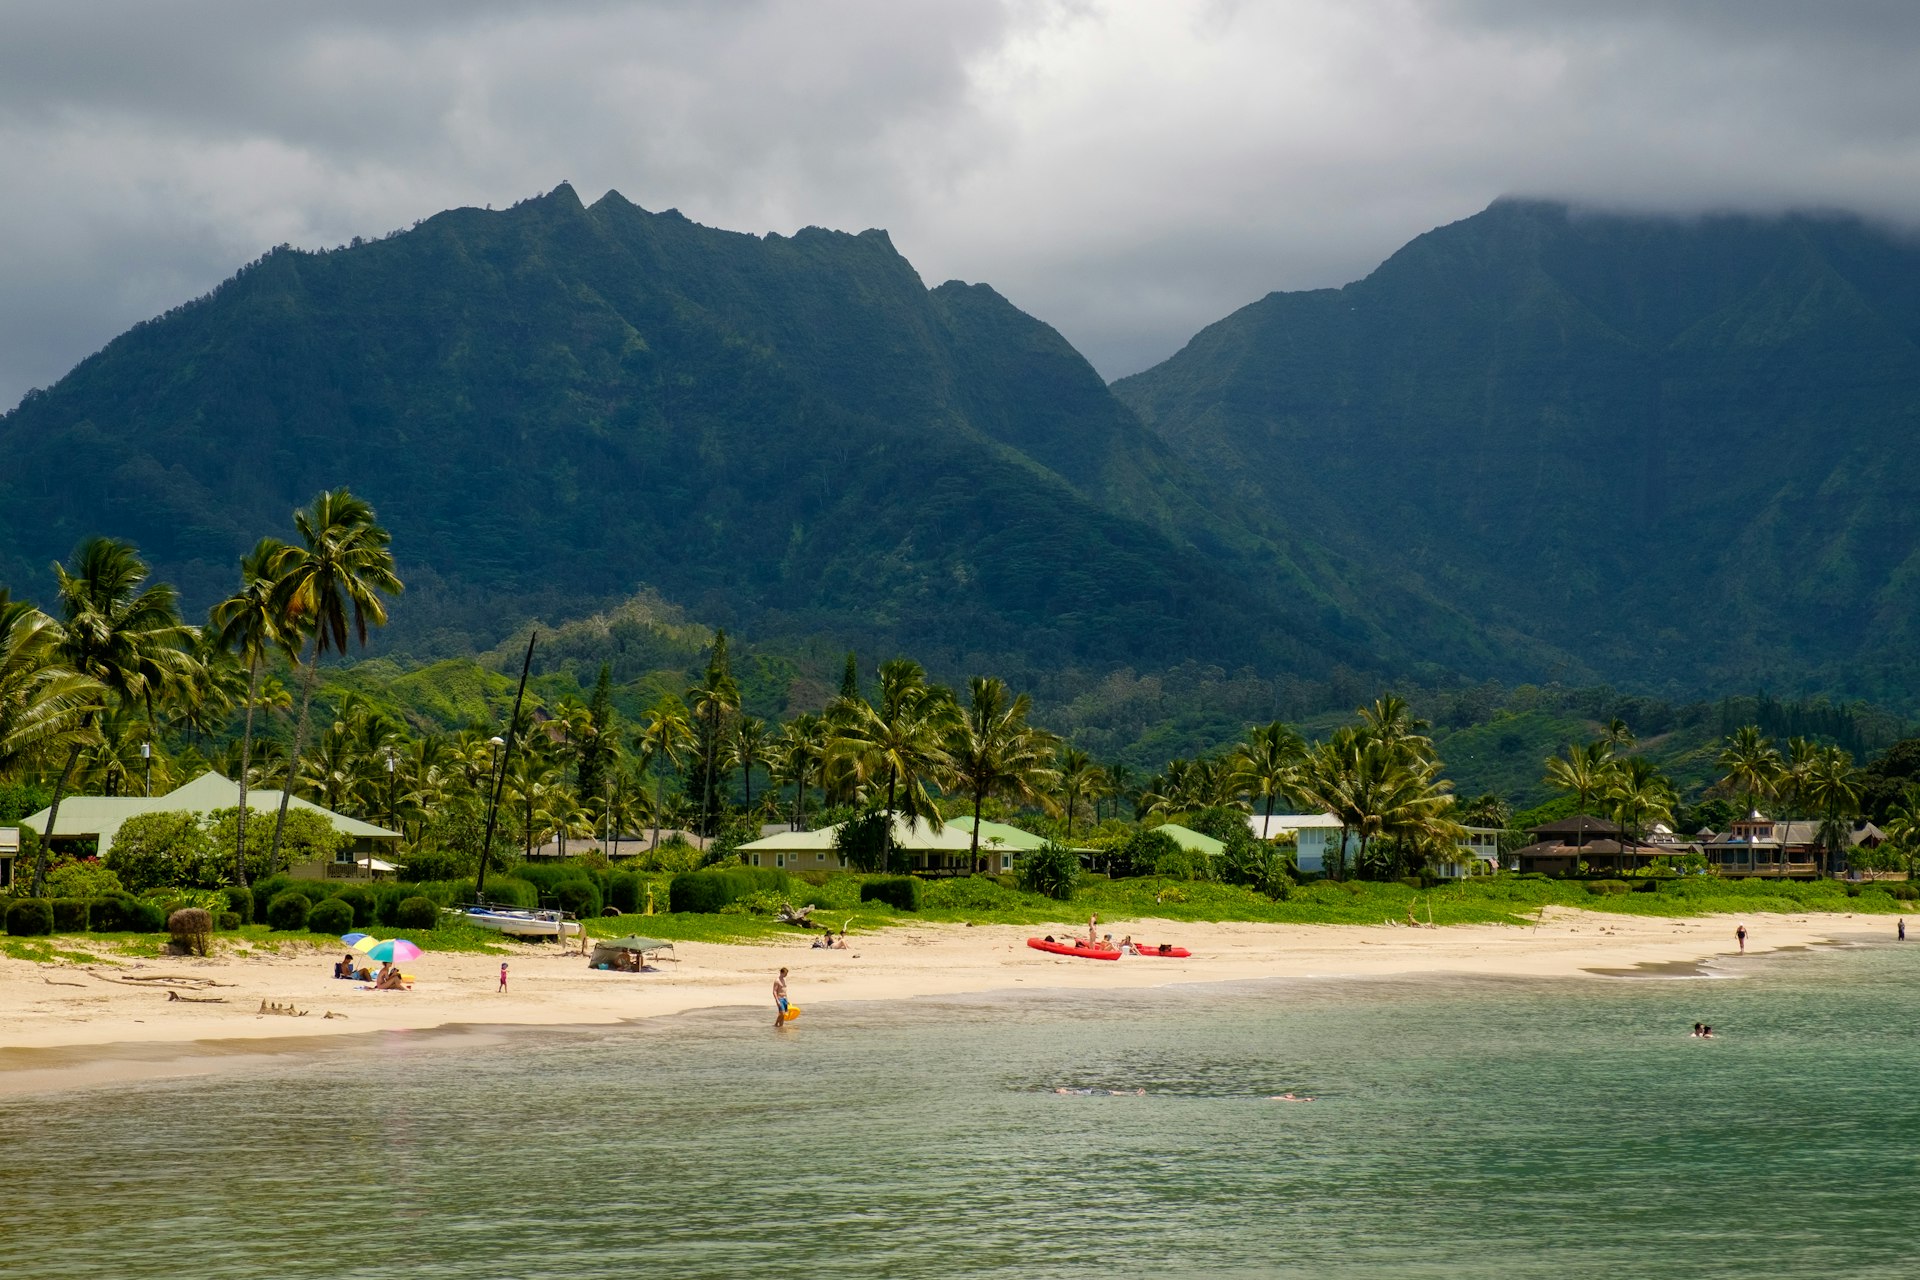 Palm trees and lush forest backs the white-sand beach of Hanalei Bay in Kaua‘i, Hawaii, USA